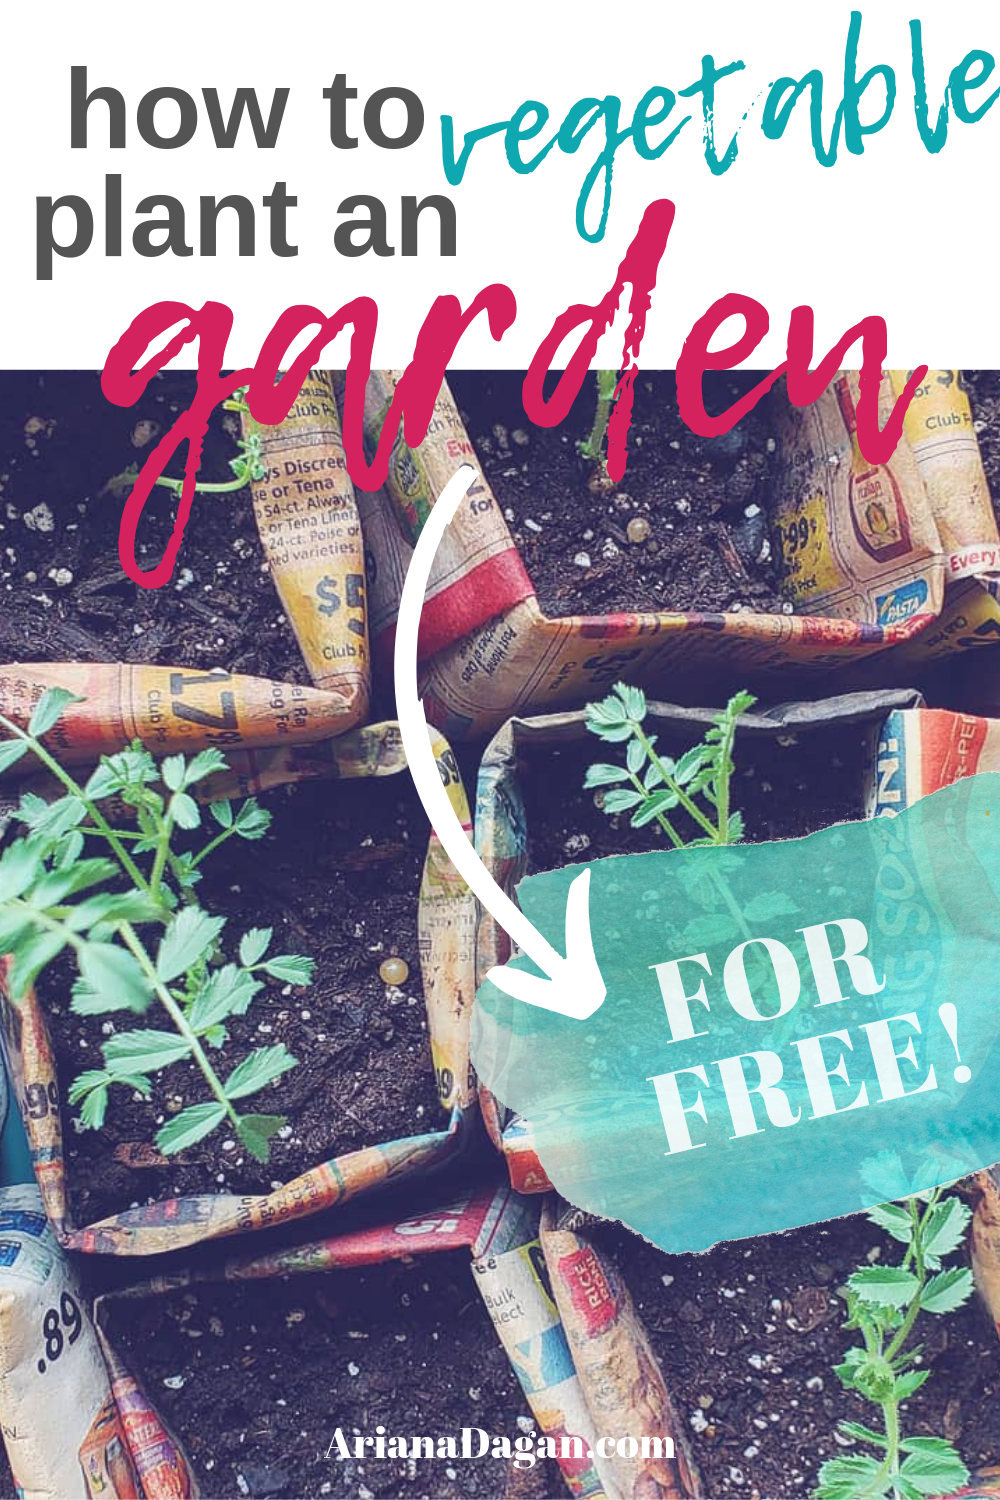 Build a Vegetable Garden for Free by Ariana Dagan